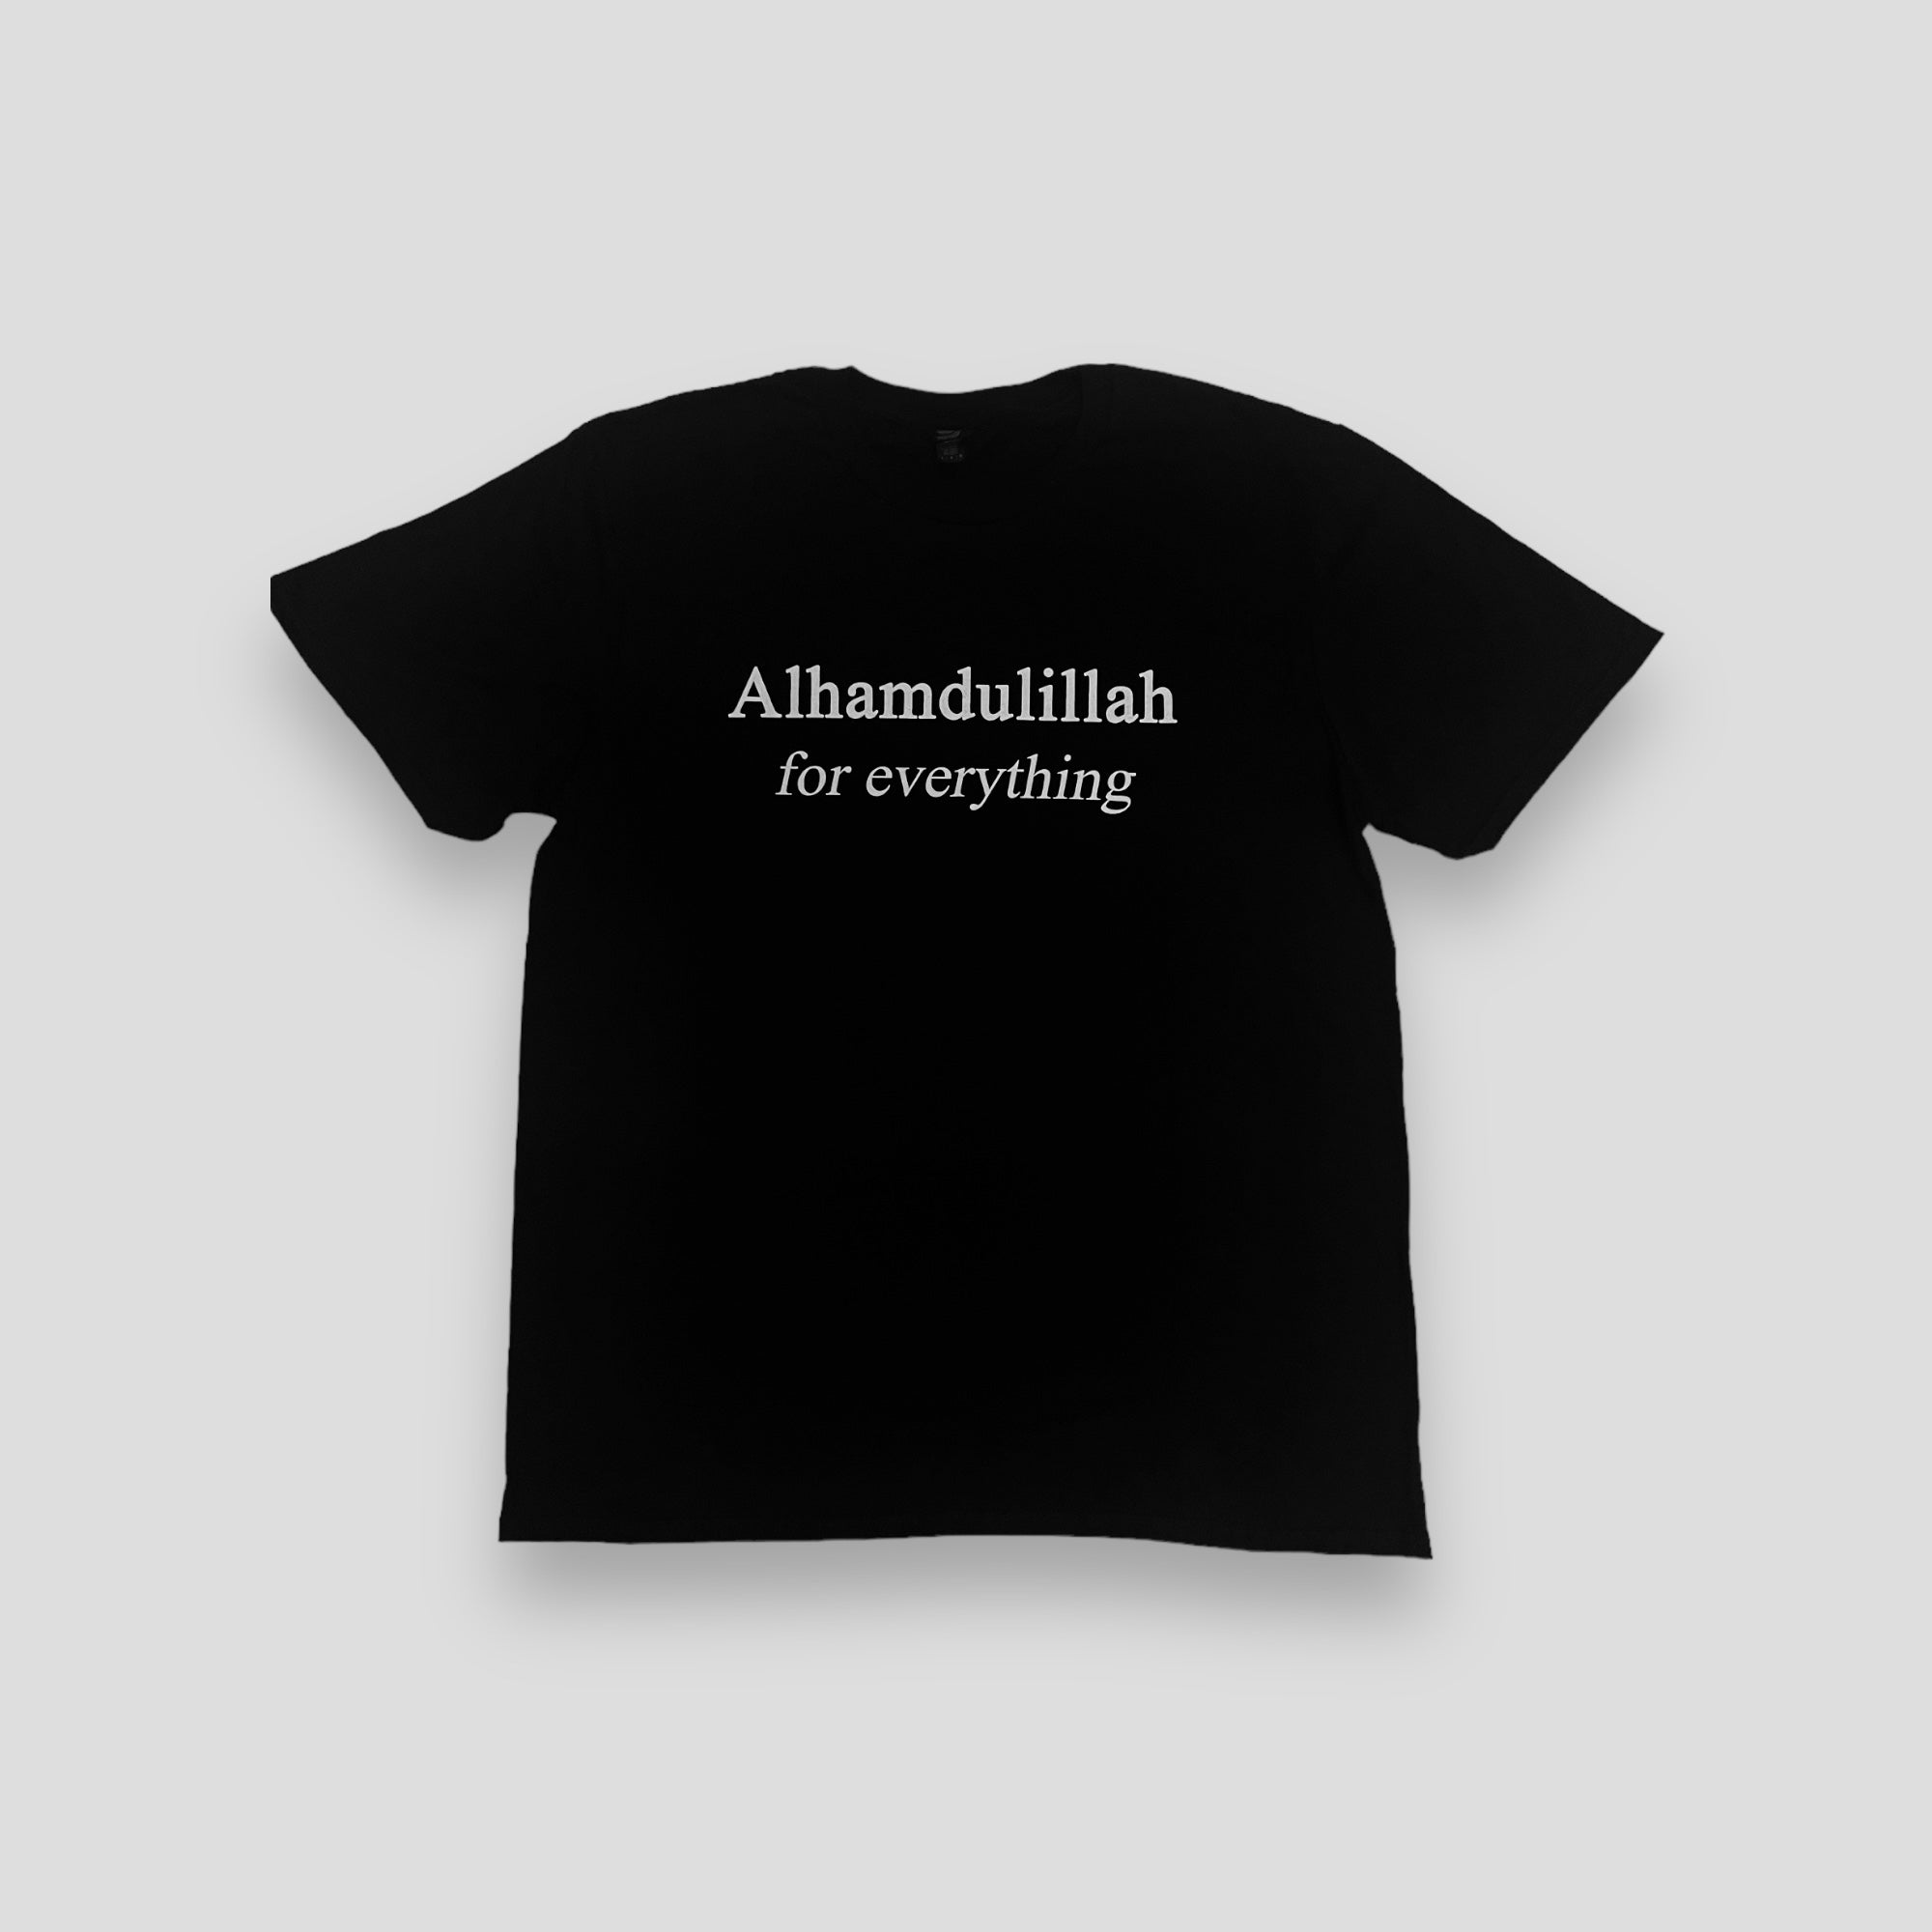 Alhamdulilah (Praise Be to God) T-shirt - Habibi Heritage